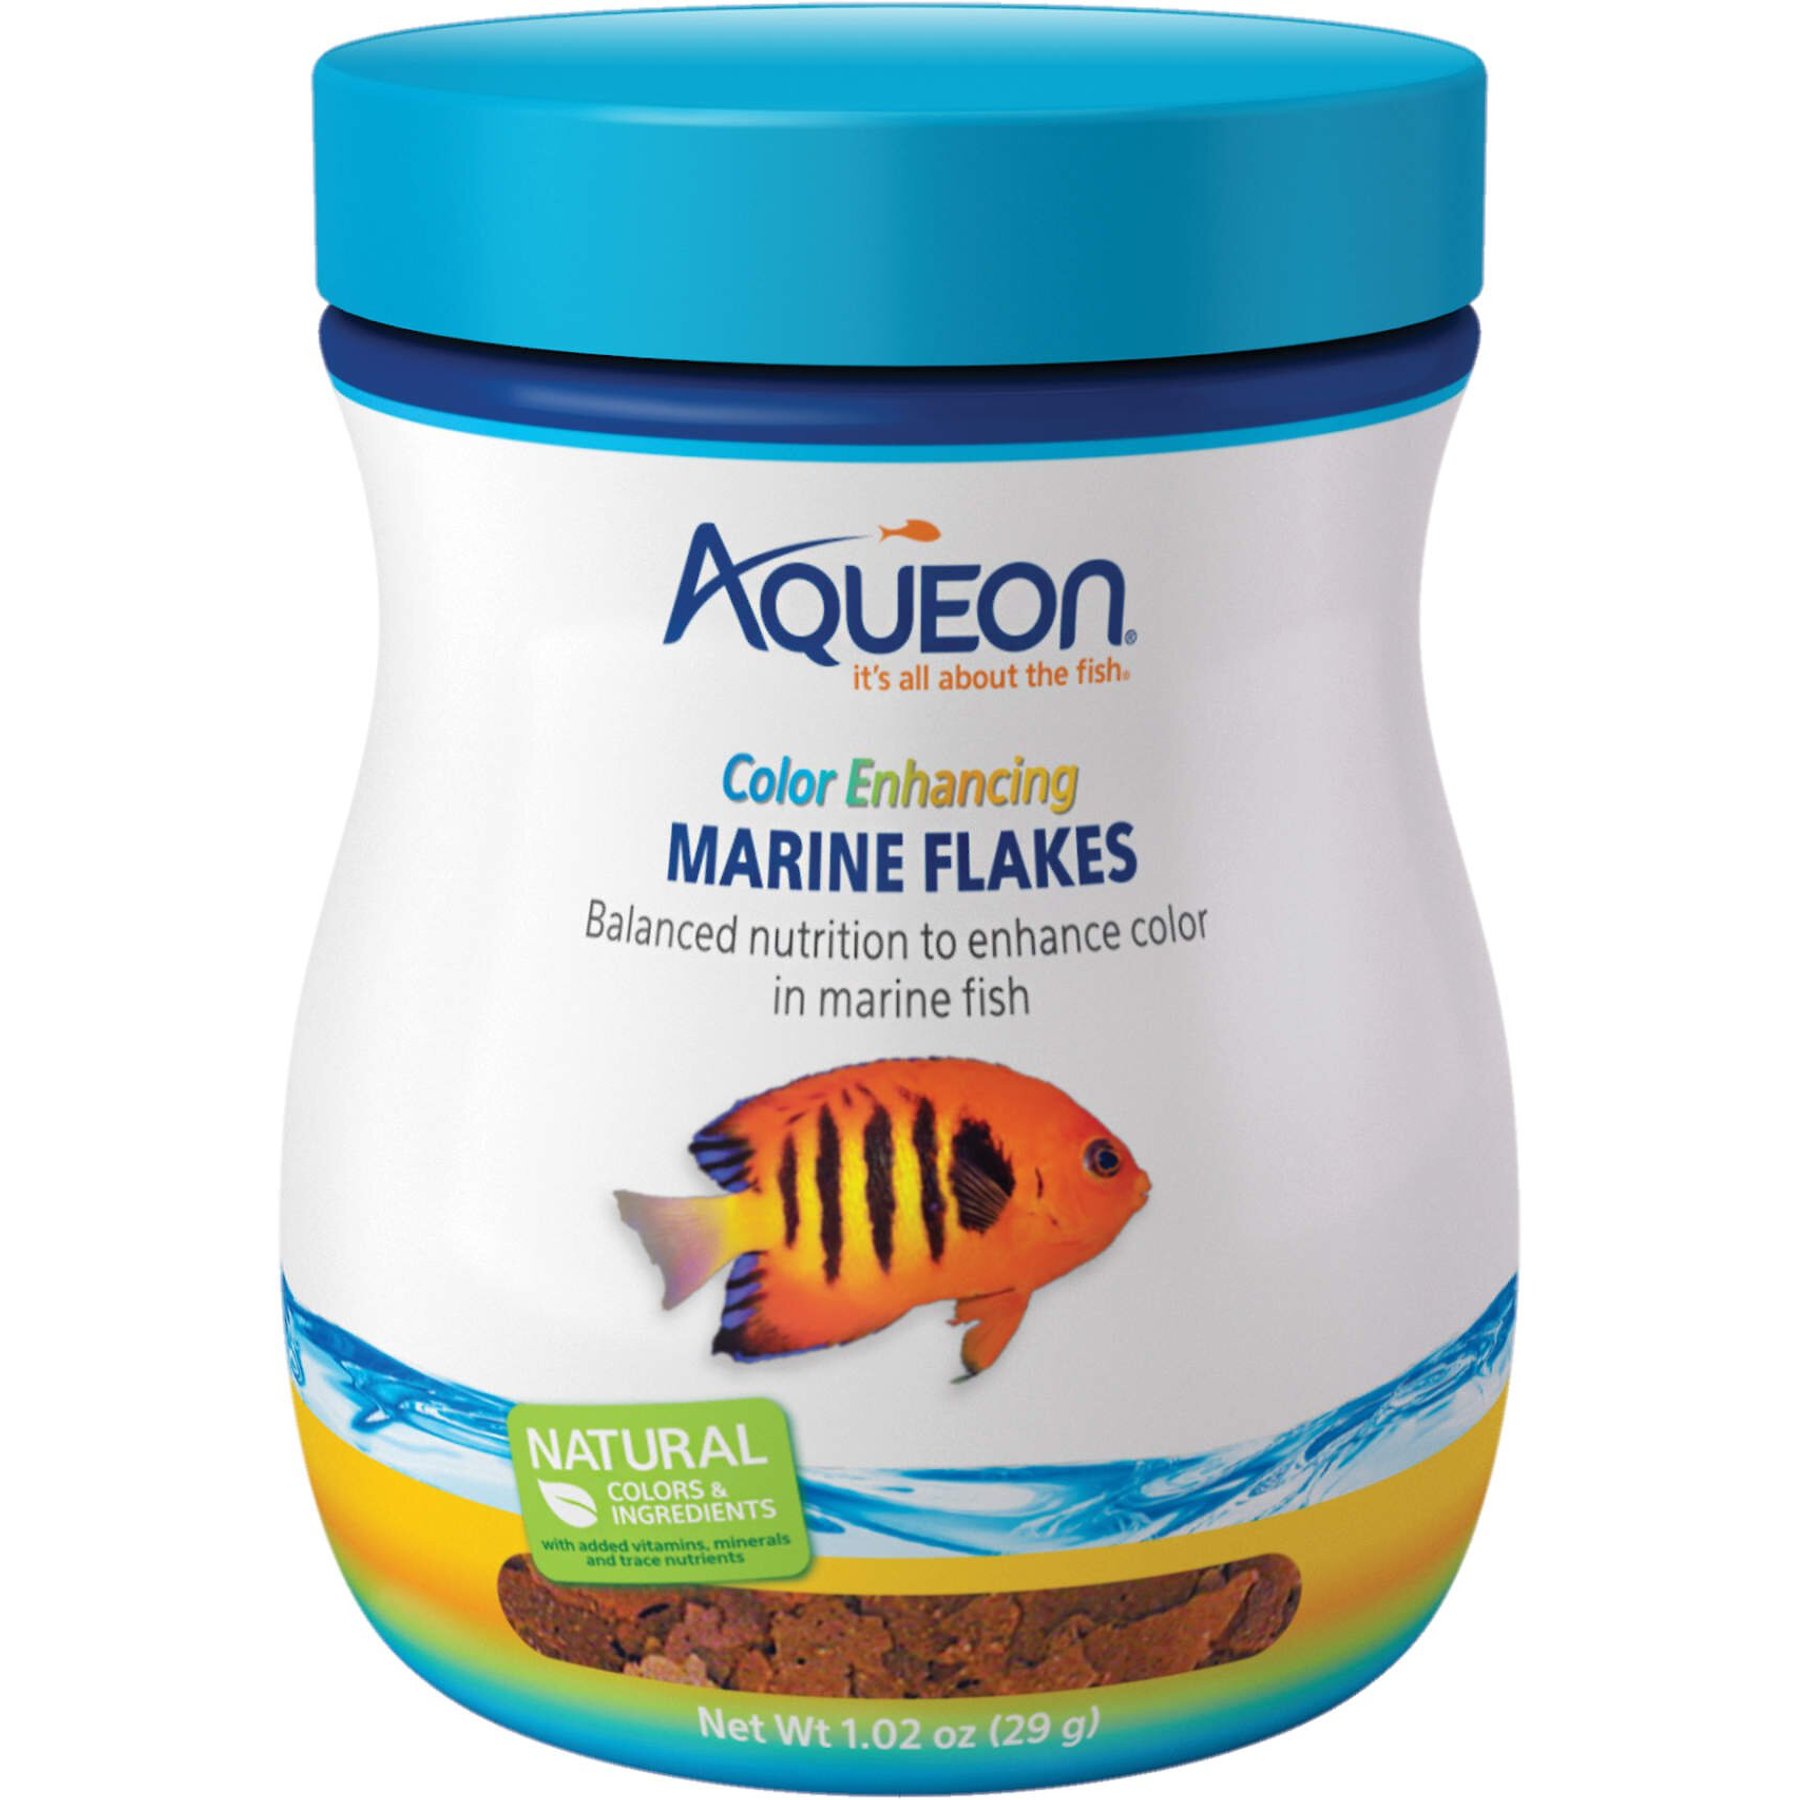 TetraMin Large Tropical Flakes Fish Food, 5.65-oz jar